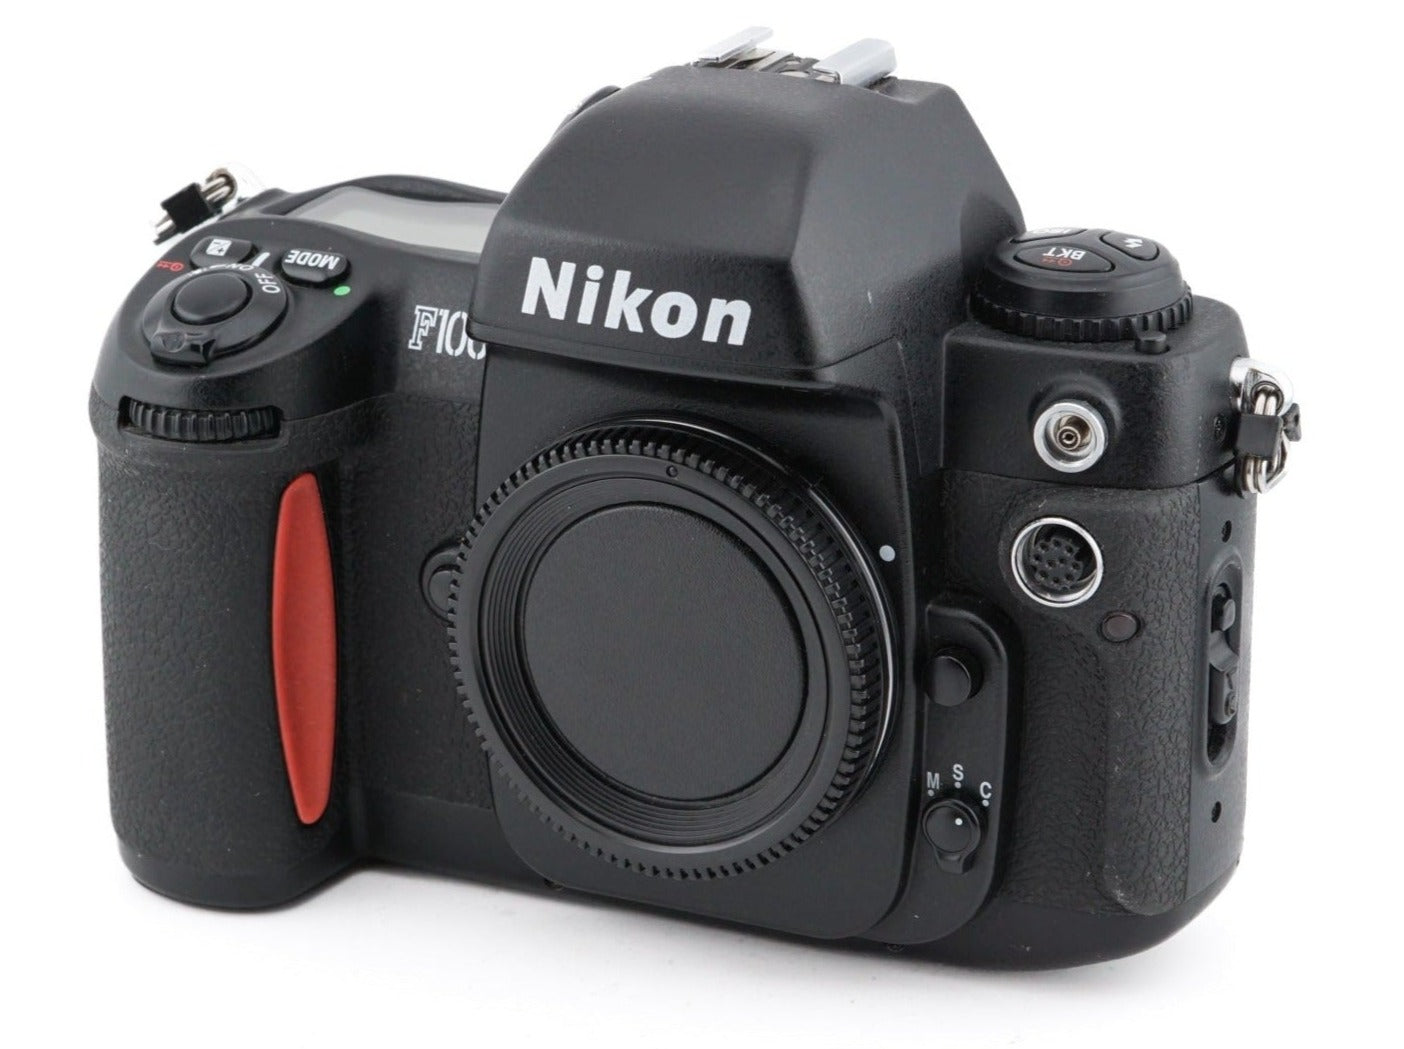 Nikon F100 - 35mm Film Camera body - with 6 month warranty